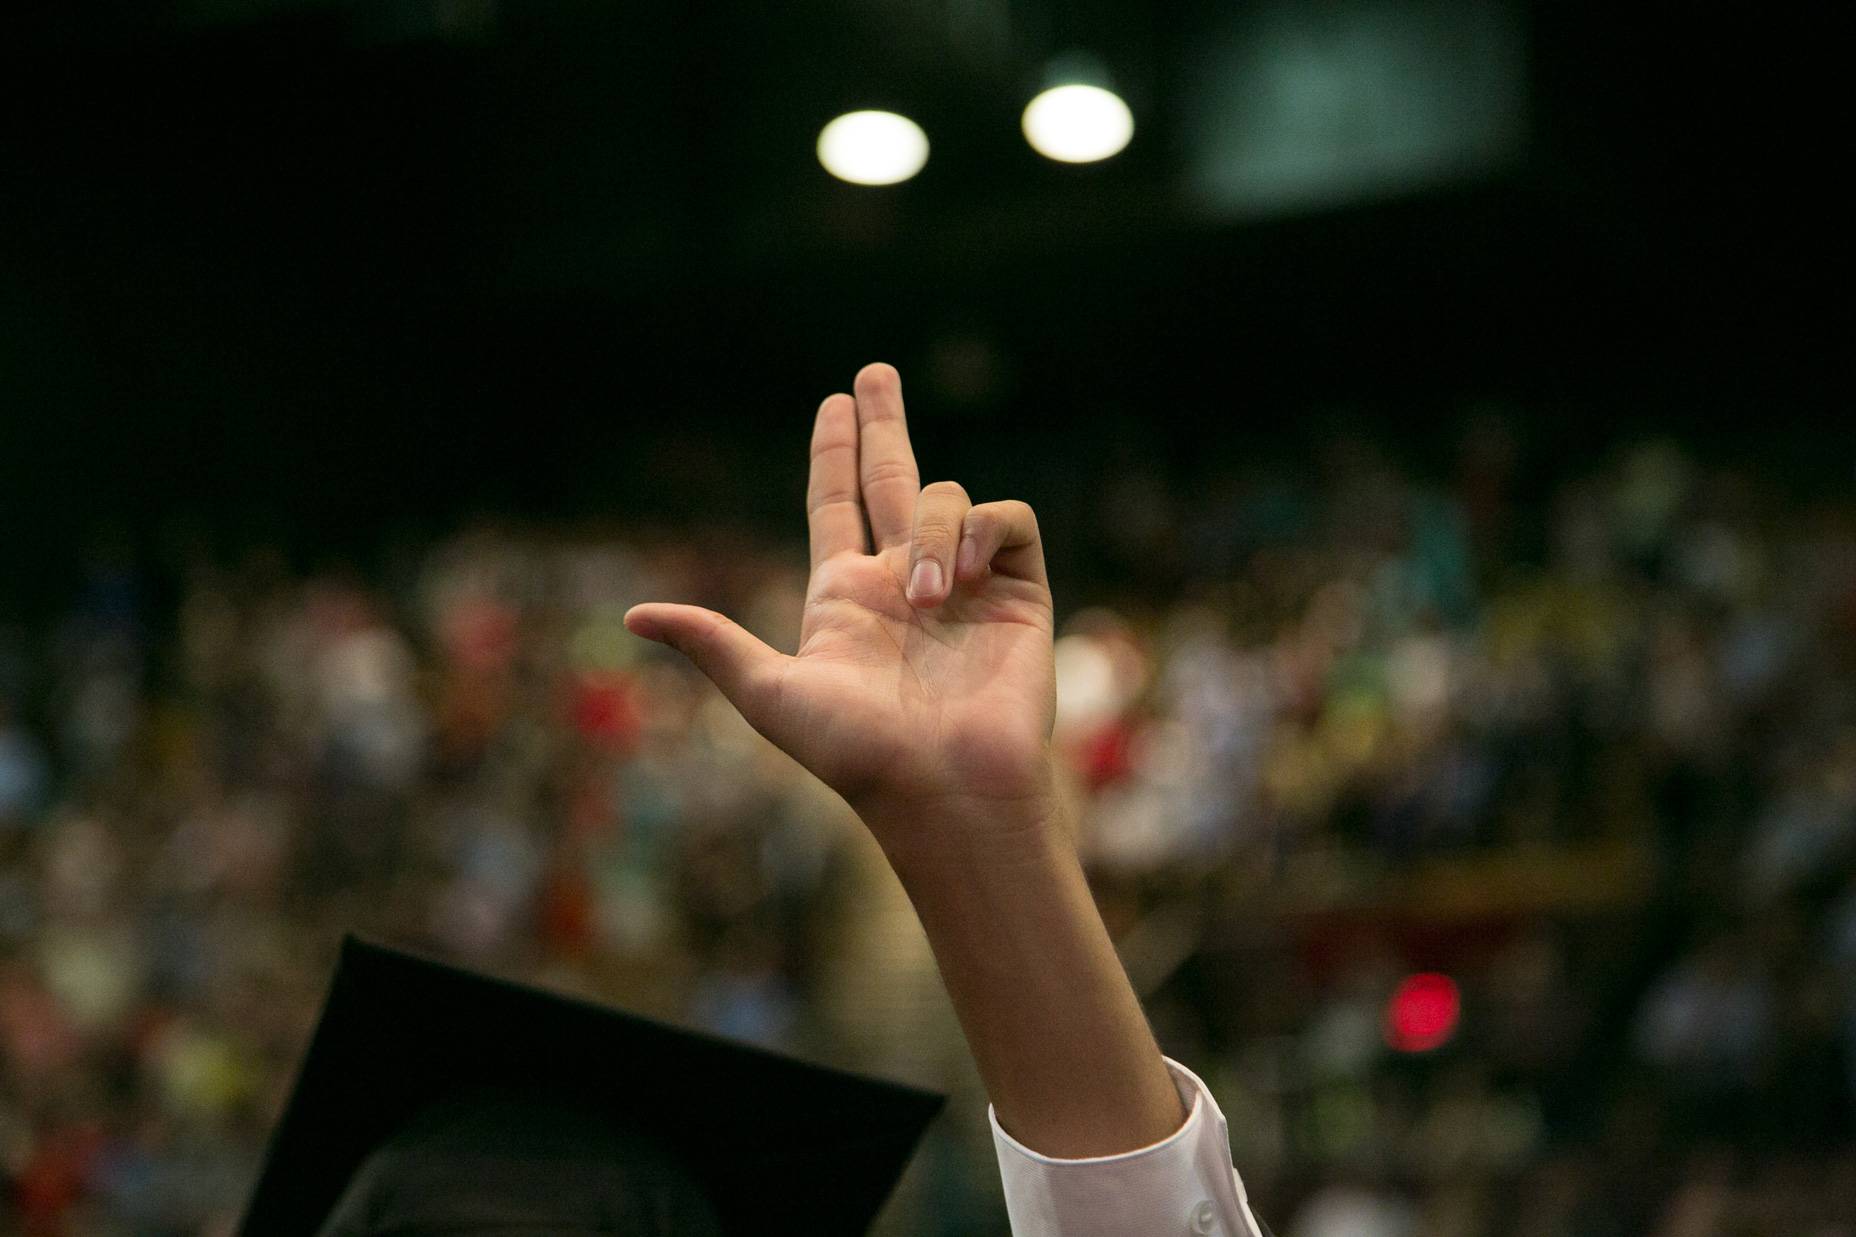 graduate hand sign image